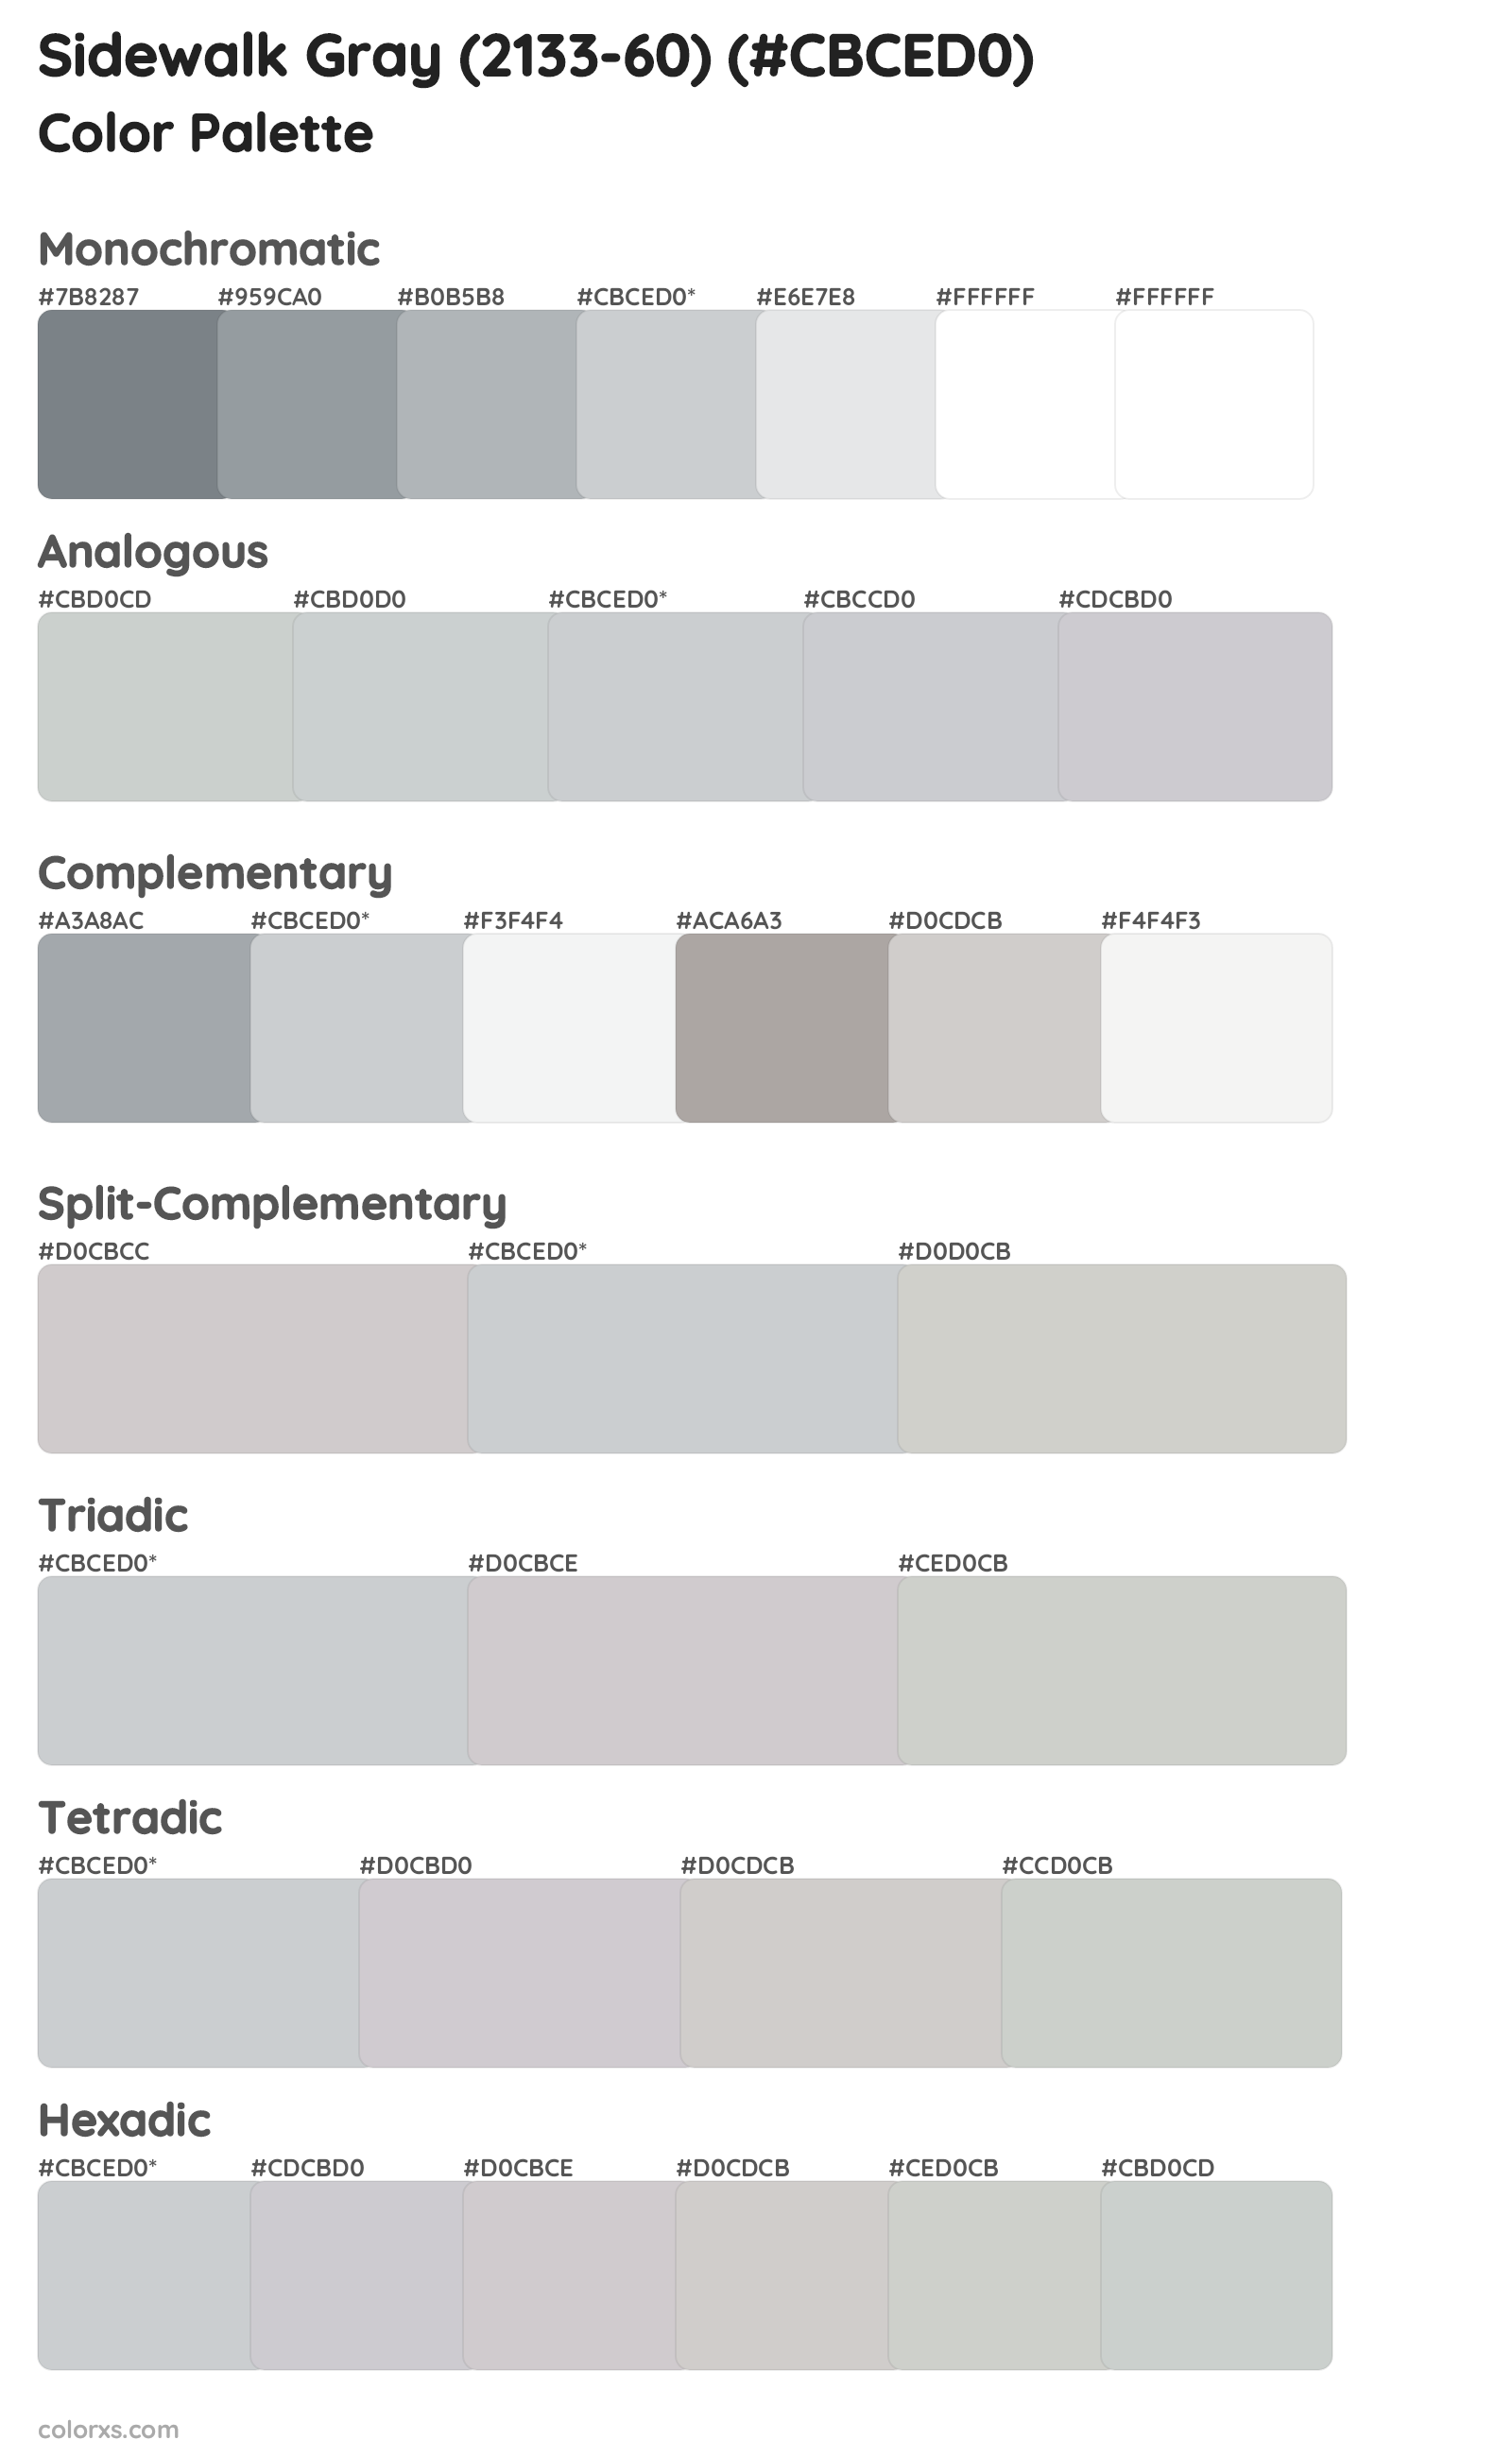 Sidewalk Gray (2133-60) Color Scheme Palettes